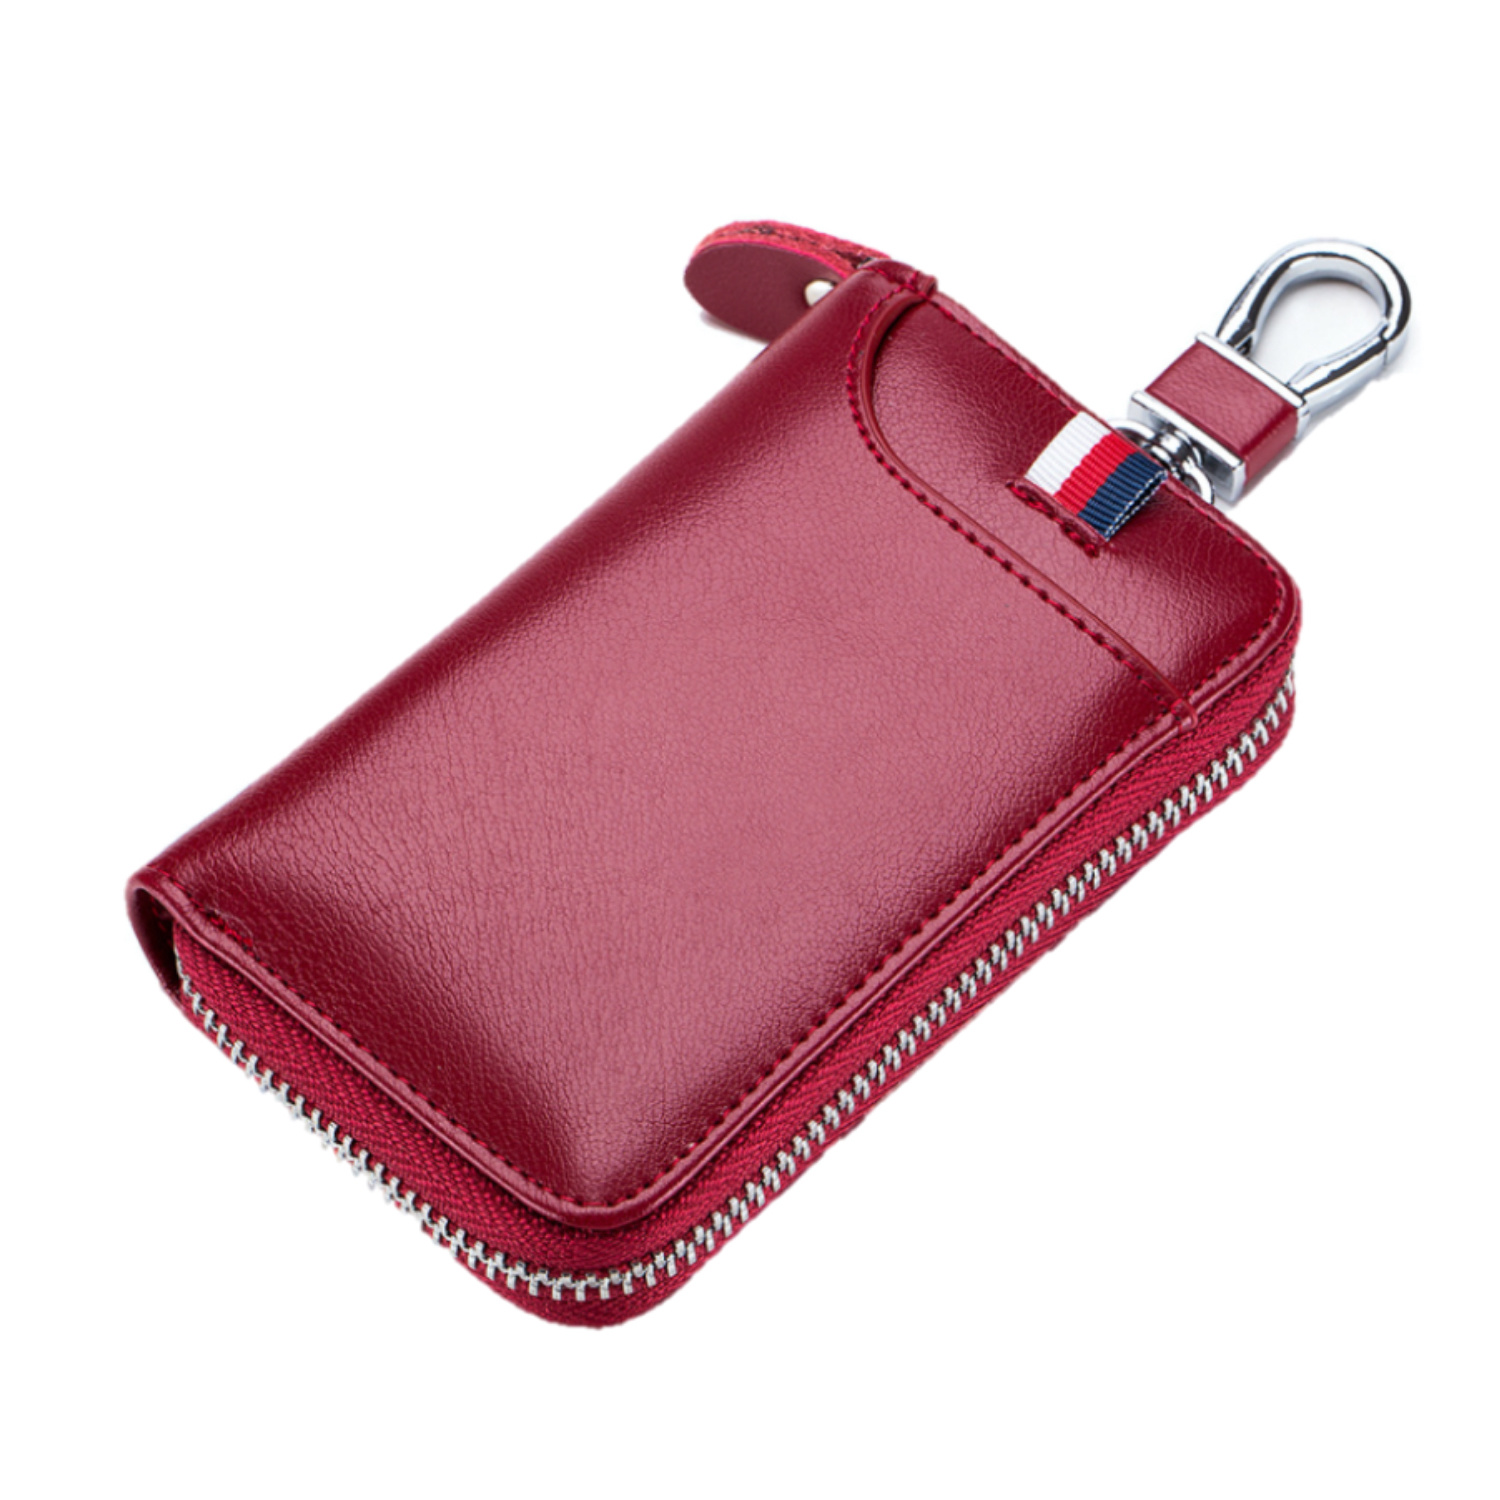 Leather Key Case, 6 Key Hooks, Card Holder, Bank Notes Wallet, Car Key Pocket, Multifunctional Key Organizer - Red-2